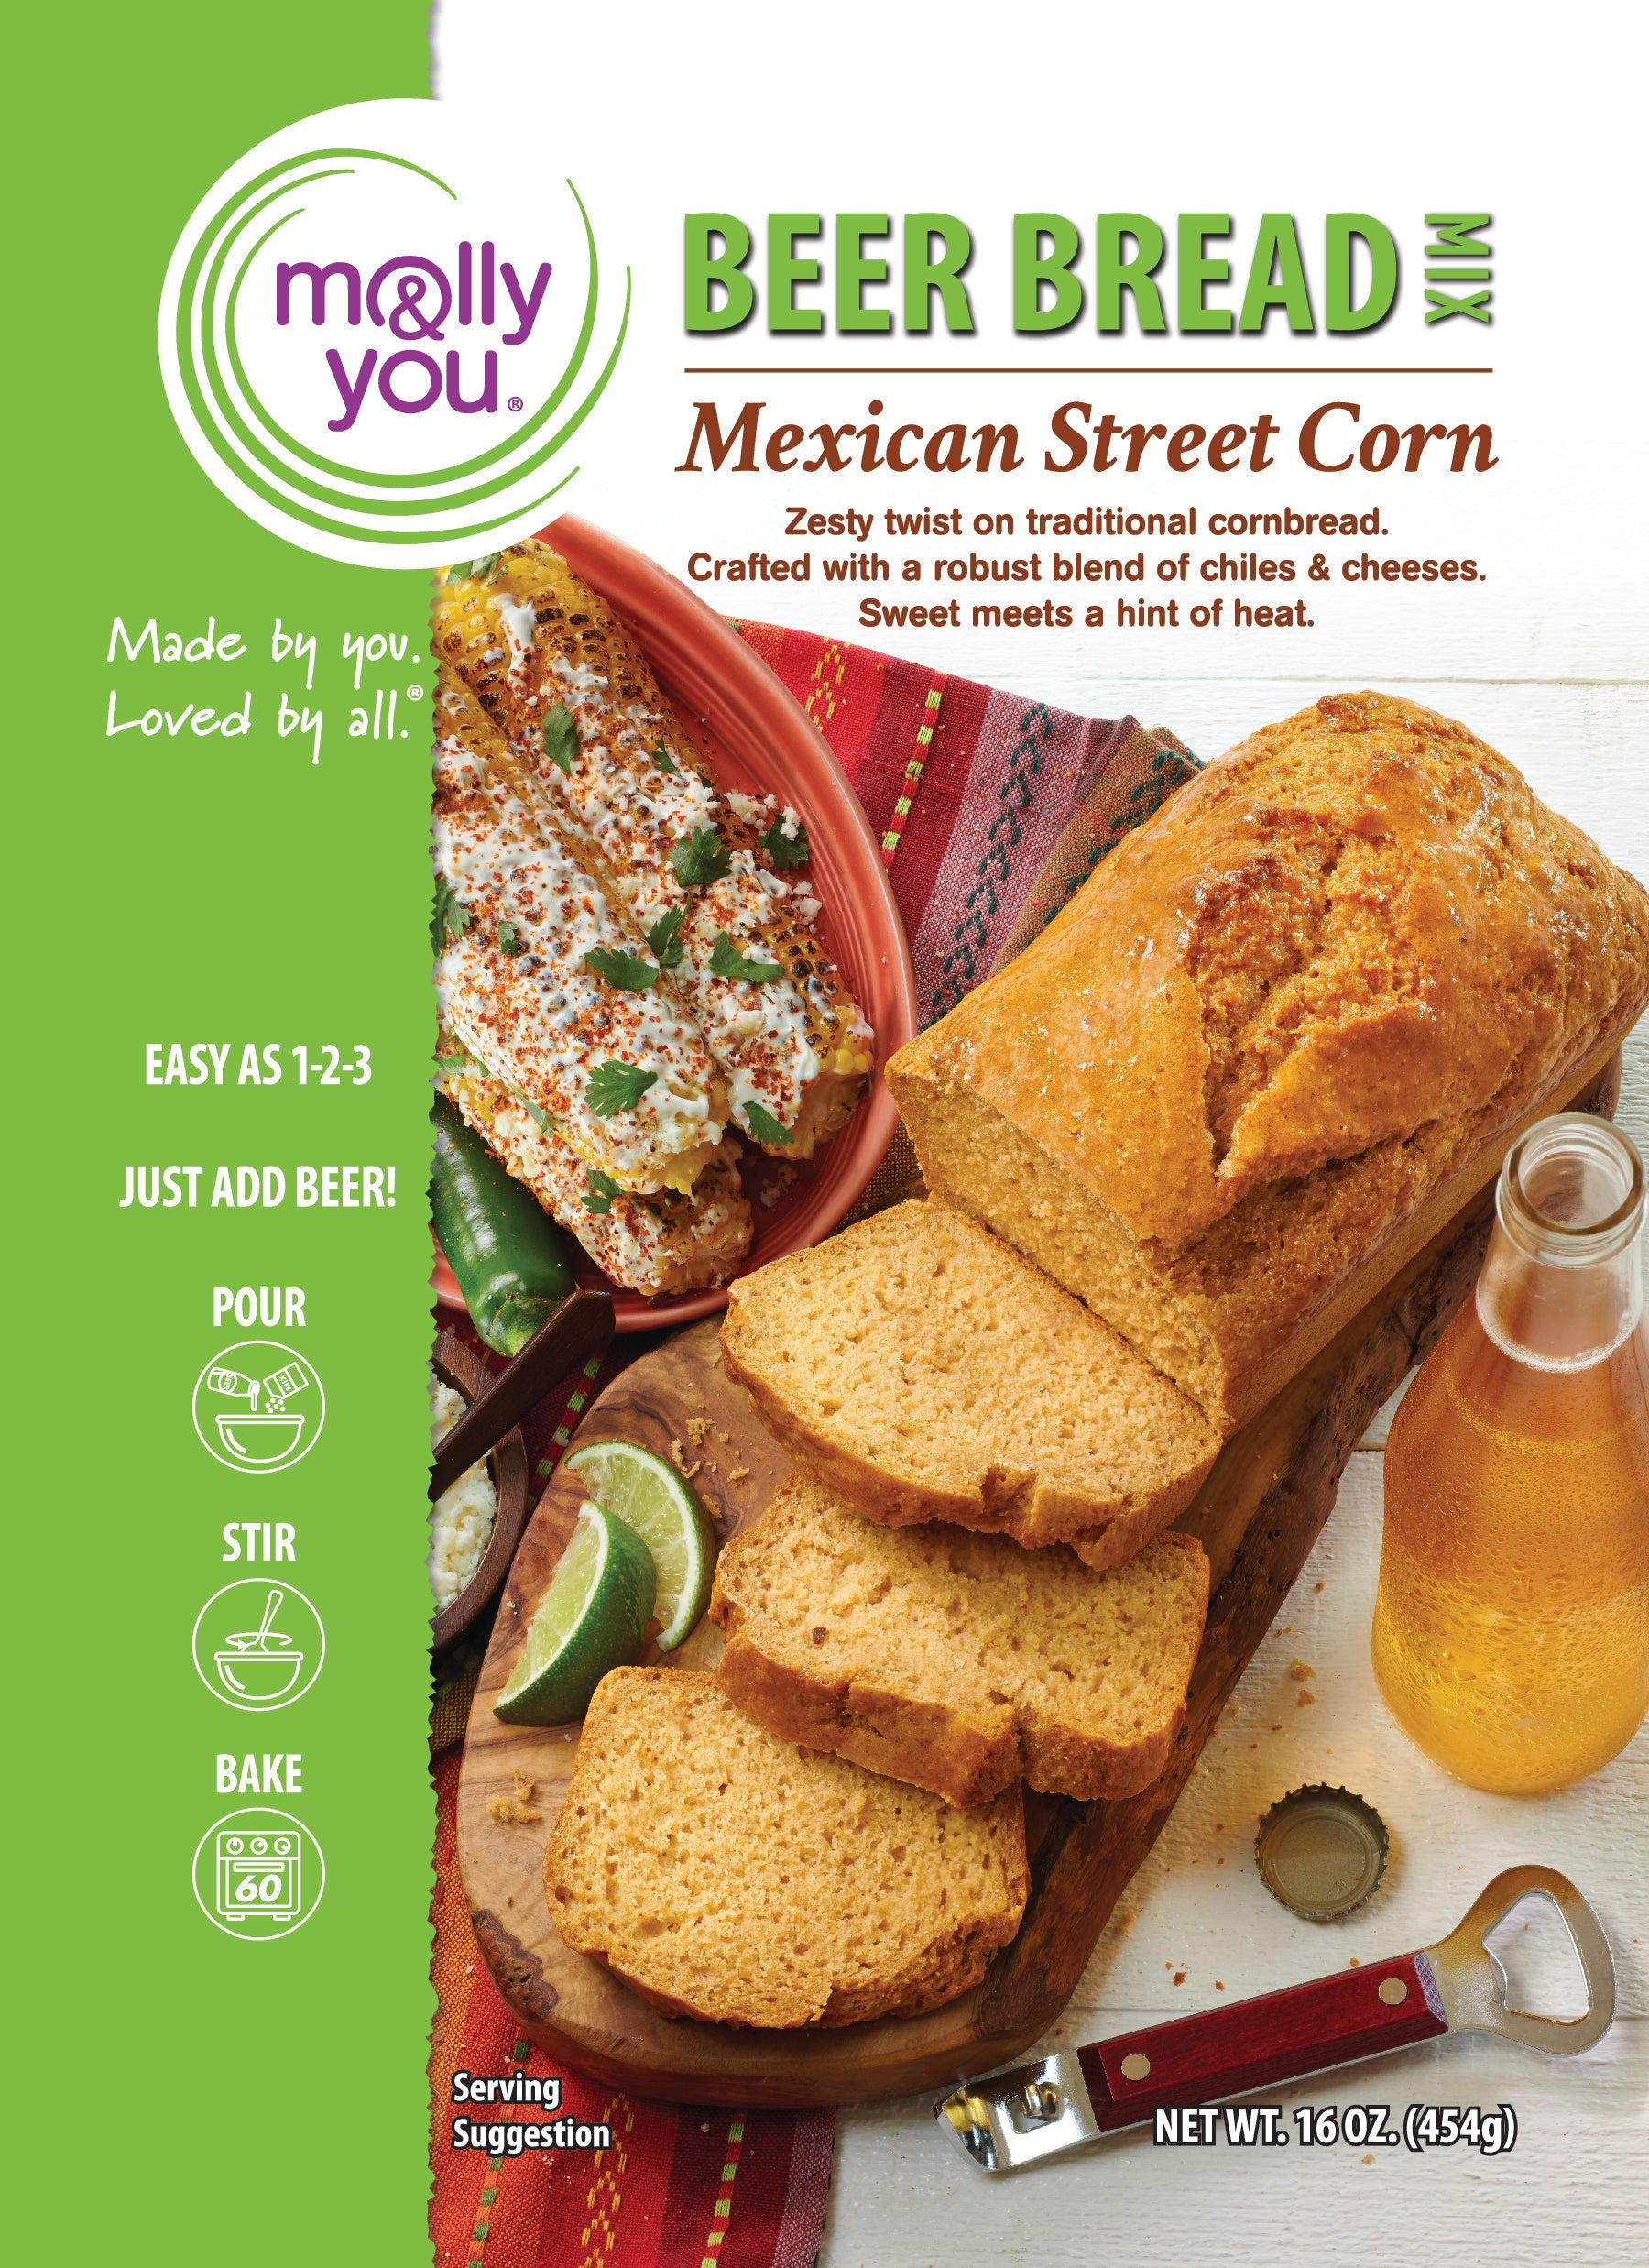 Mexican Street Corn Beer Bread Mix.